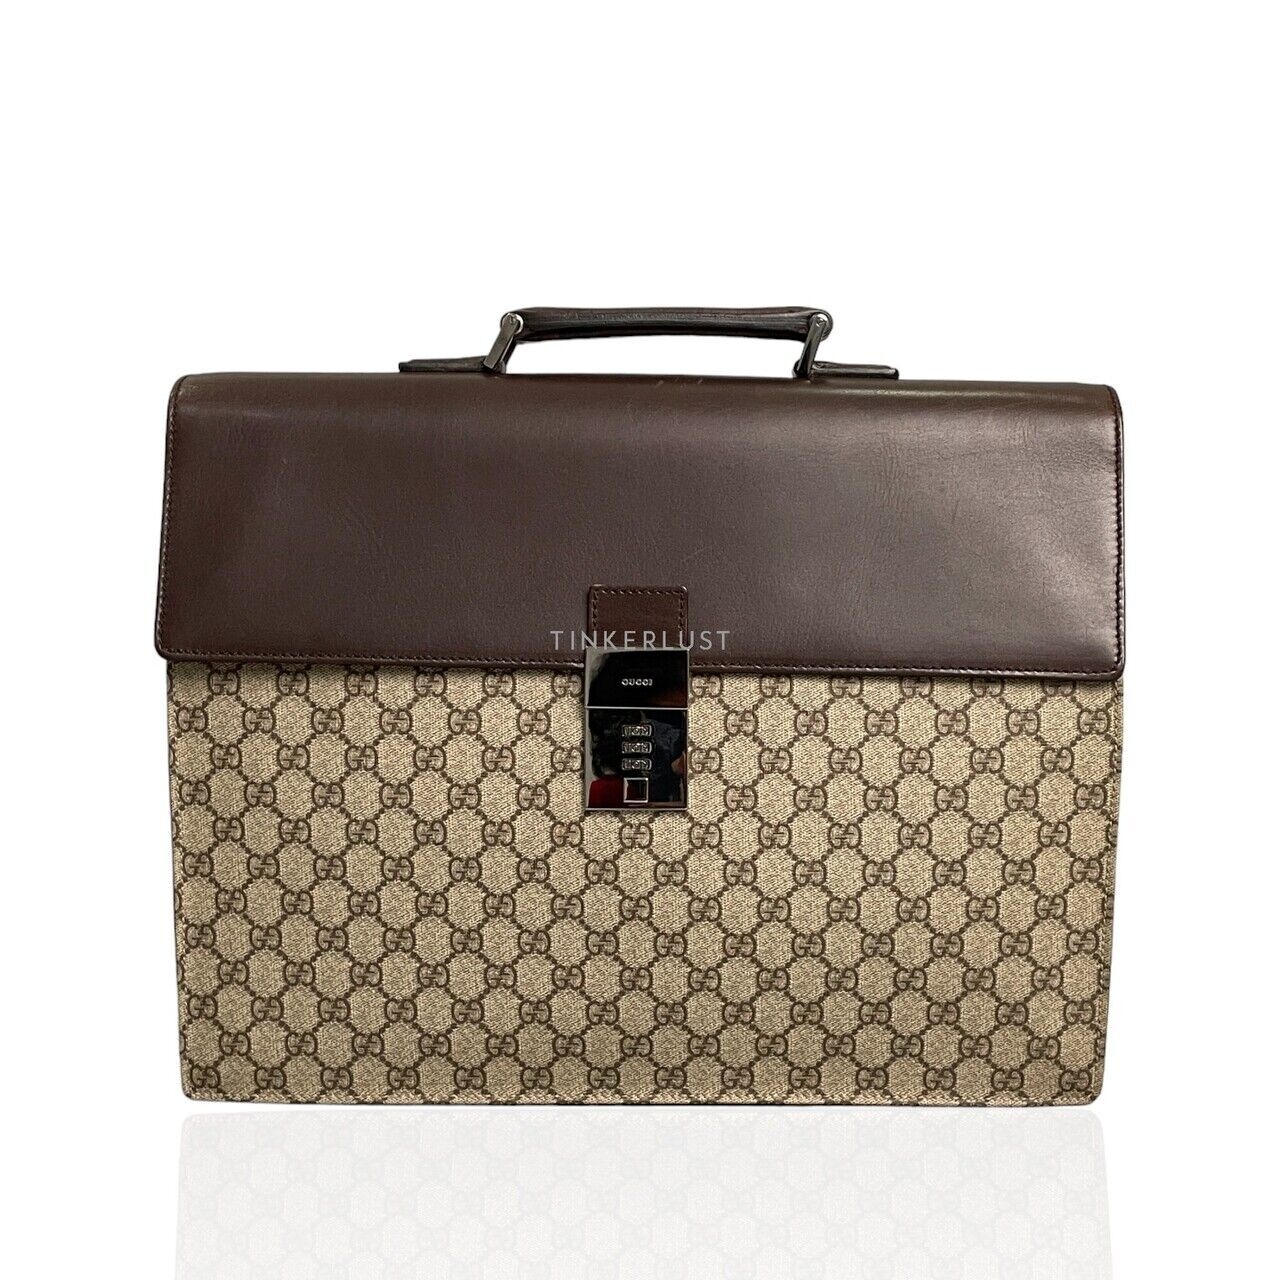 Gucci Business Bag Brown GG Monogram Canvas Briefcase